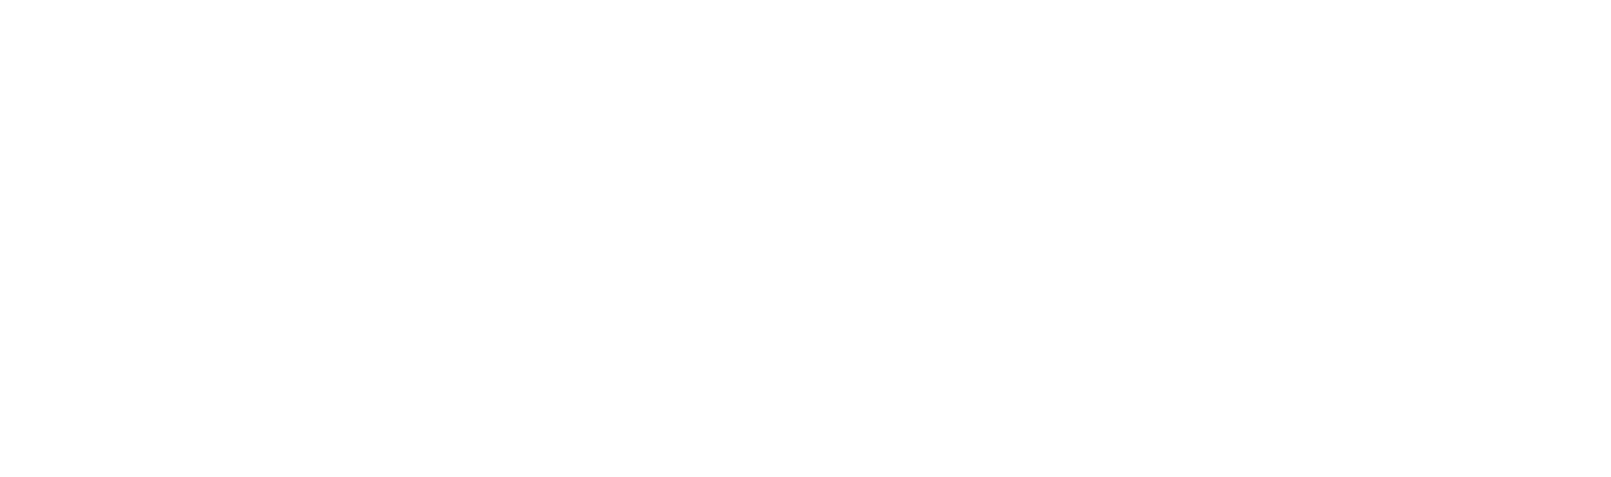 Sourek Manor Funeral Home Logo